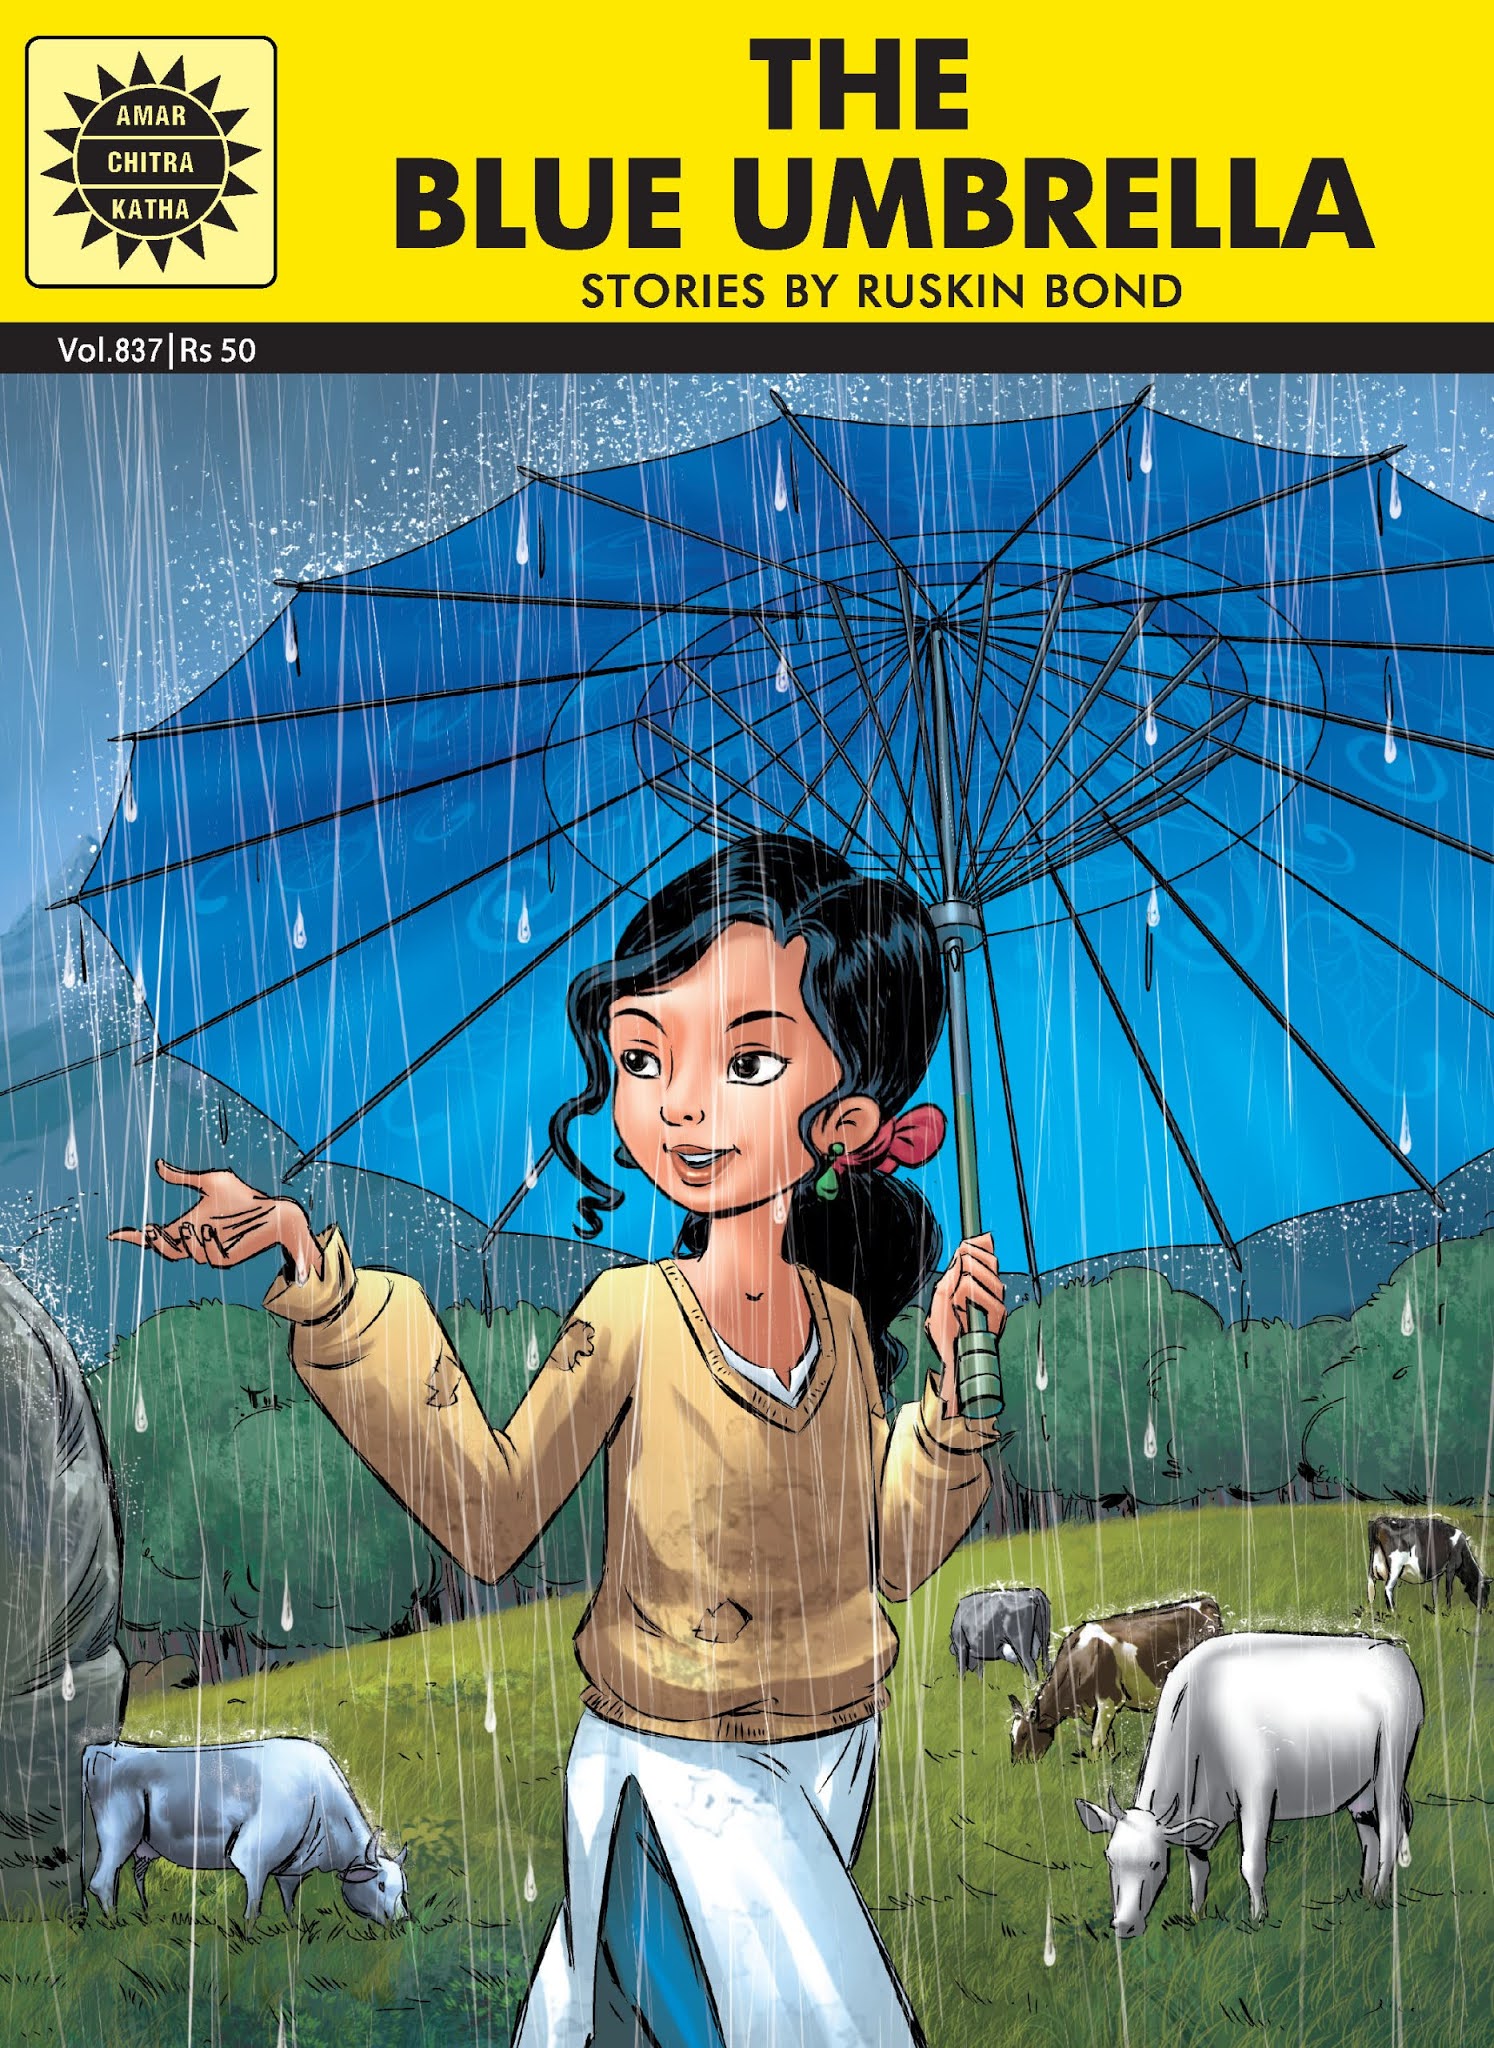 the umbrella book review